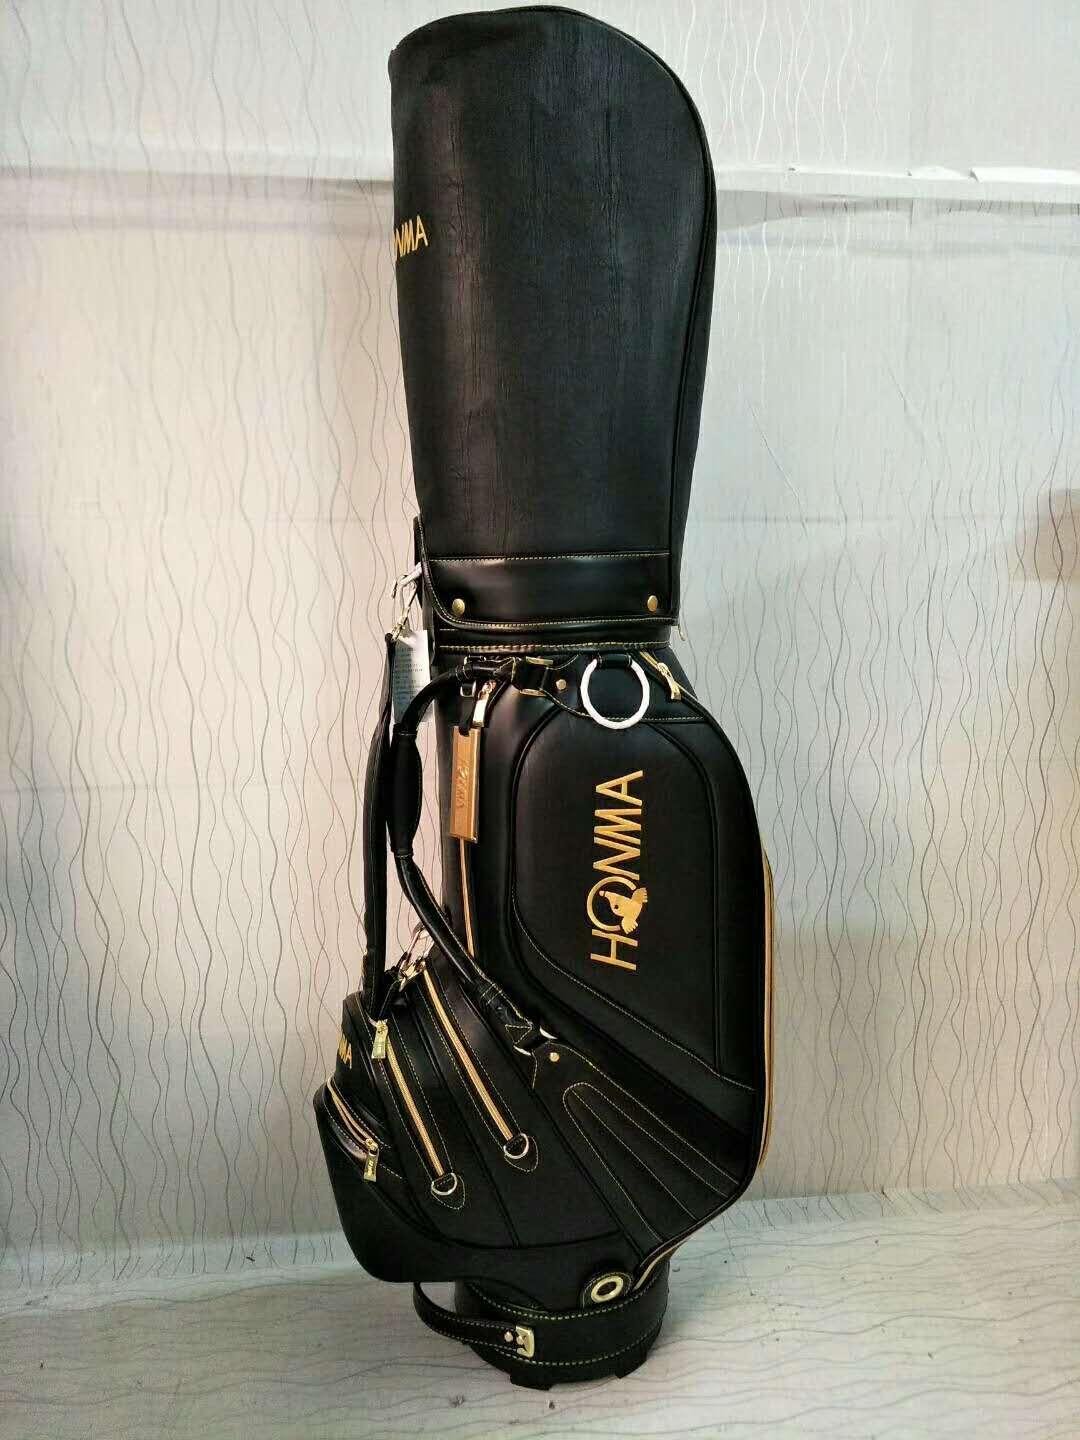 Homa carry/ stand golf bag 5